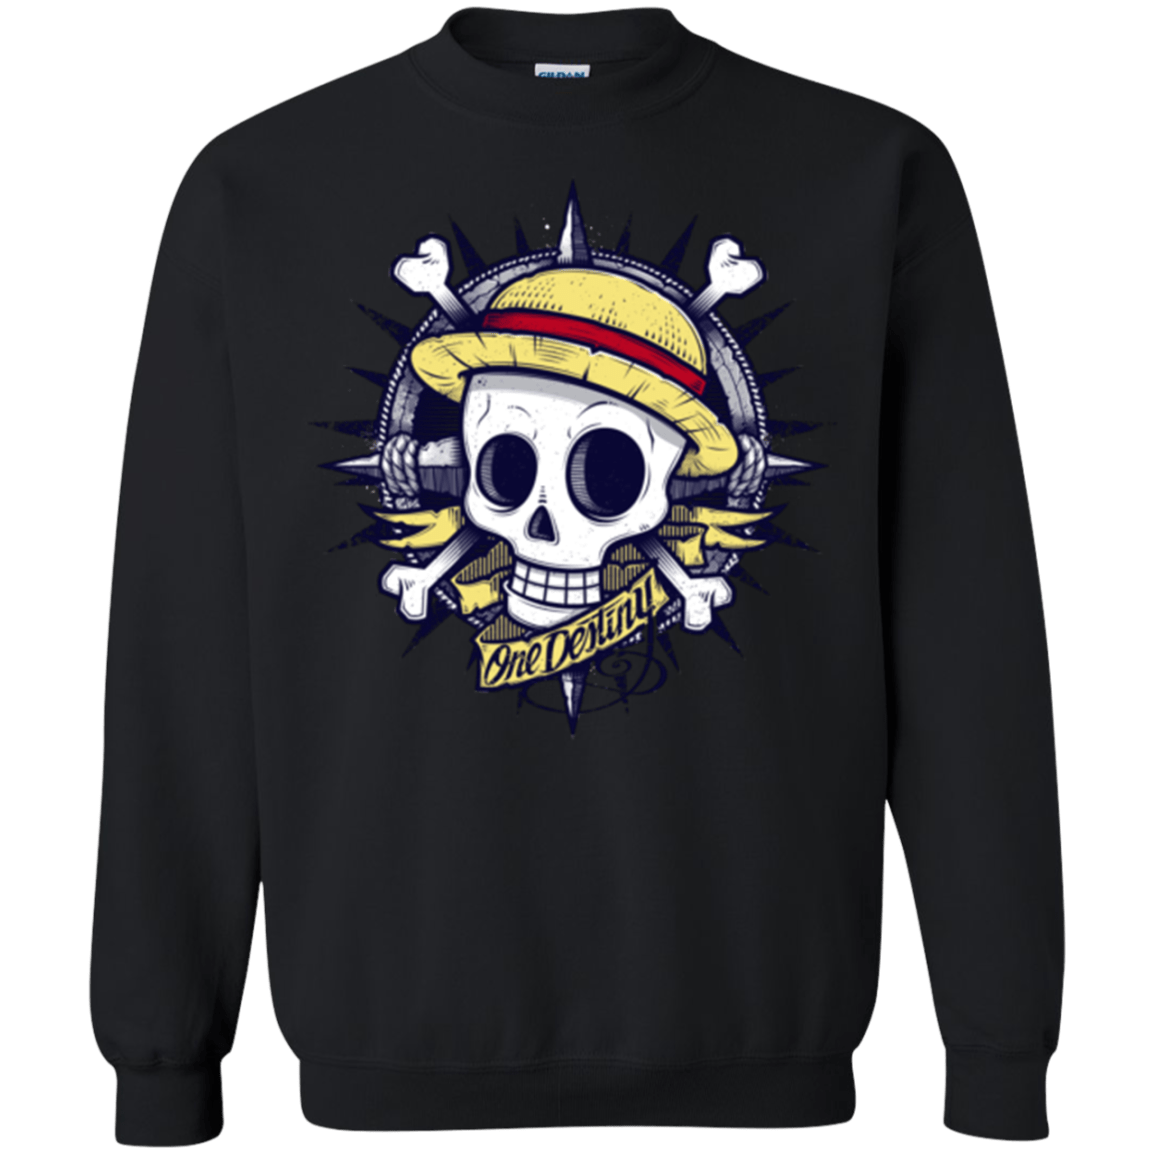 Sweatshirts Black / Small One Destiny Crewneck Sweatshirt